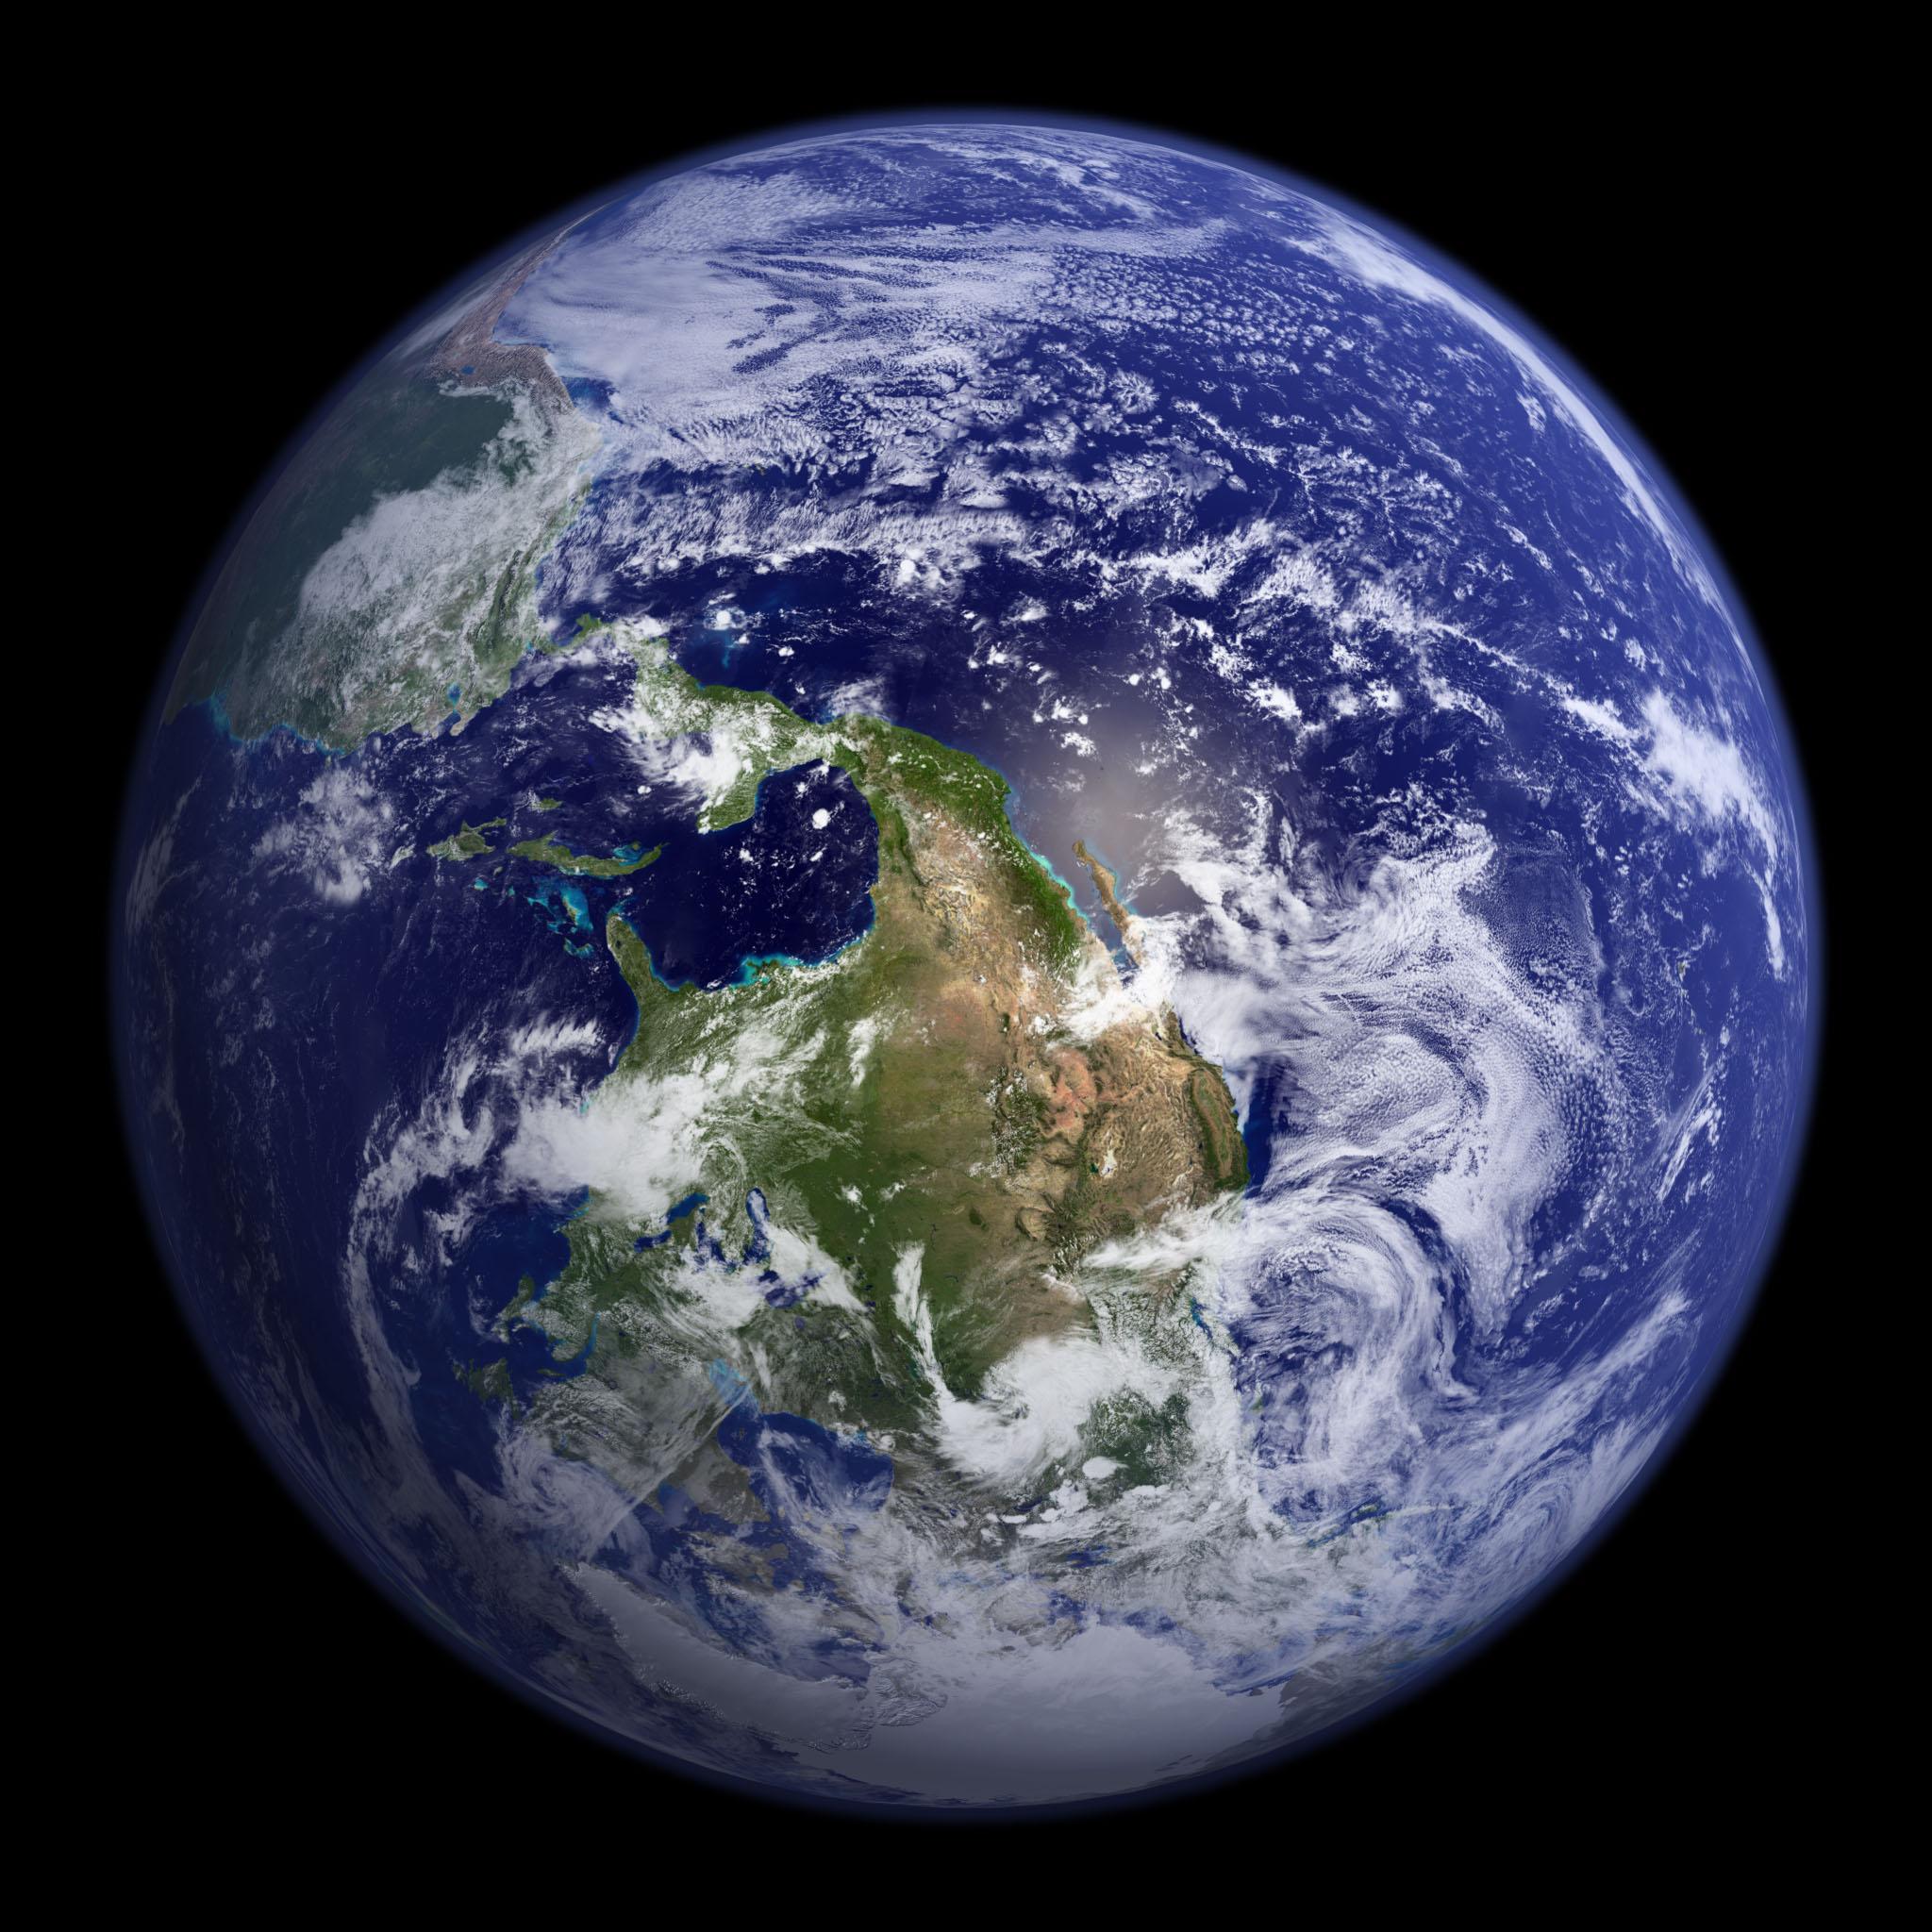 Картинка планета земля из космоса. Планета земля. Голубая Планета земля. Вид земли из космоса. Земной шар из космоса.